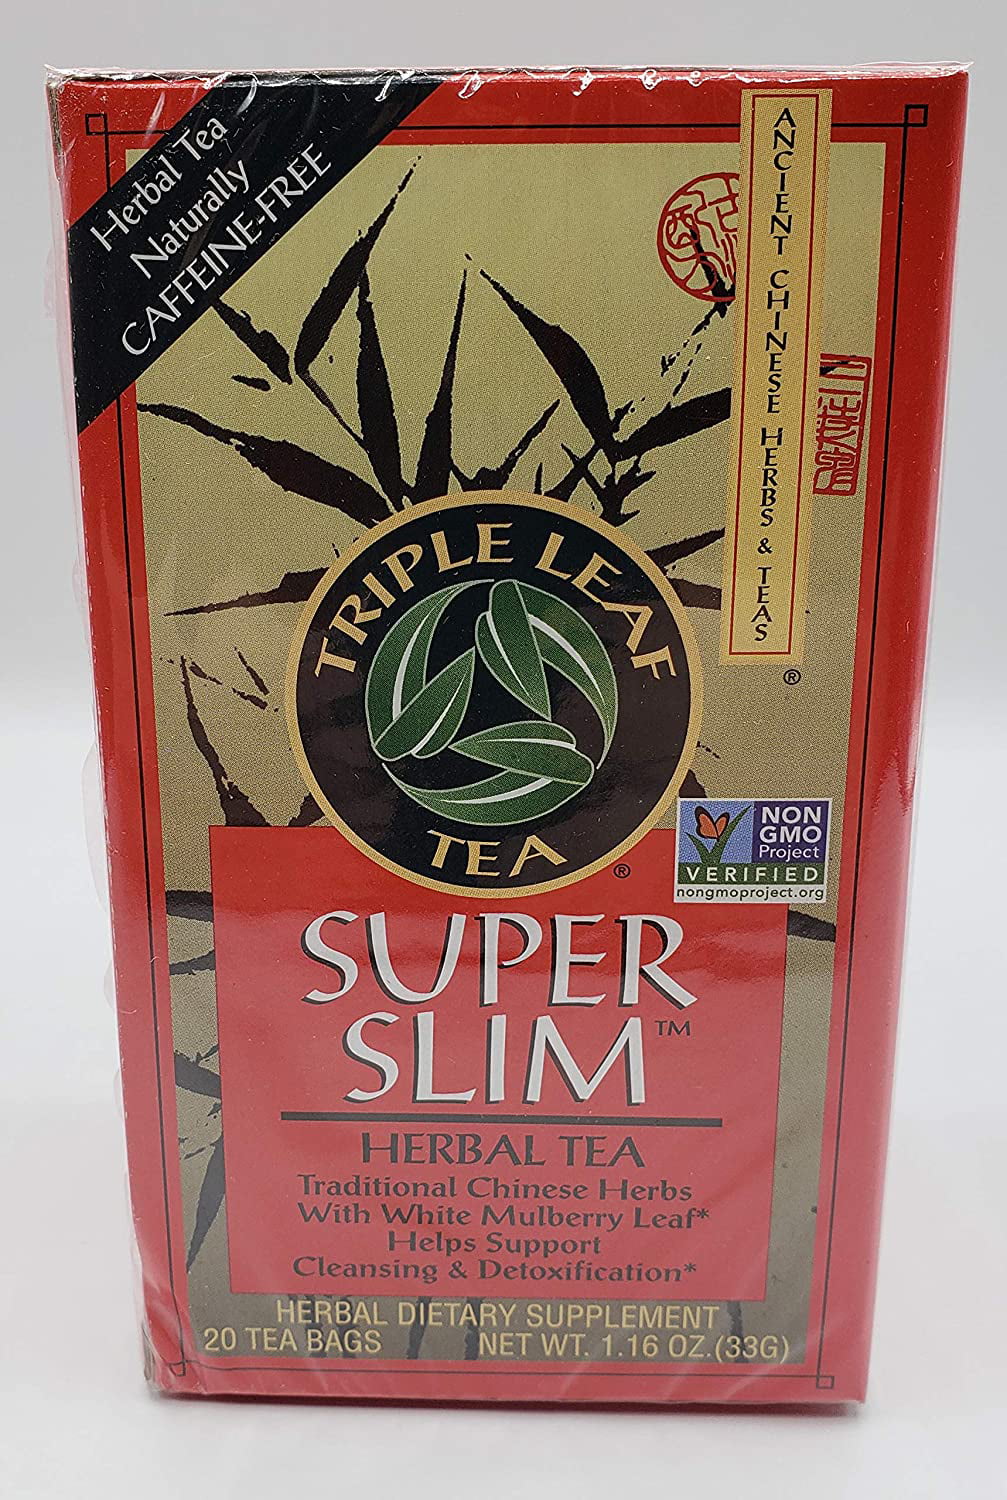 Triple Leaf Tea Super Slimming Herbal Tea 20 Tea Bags